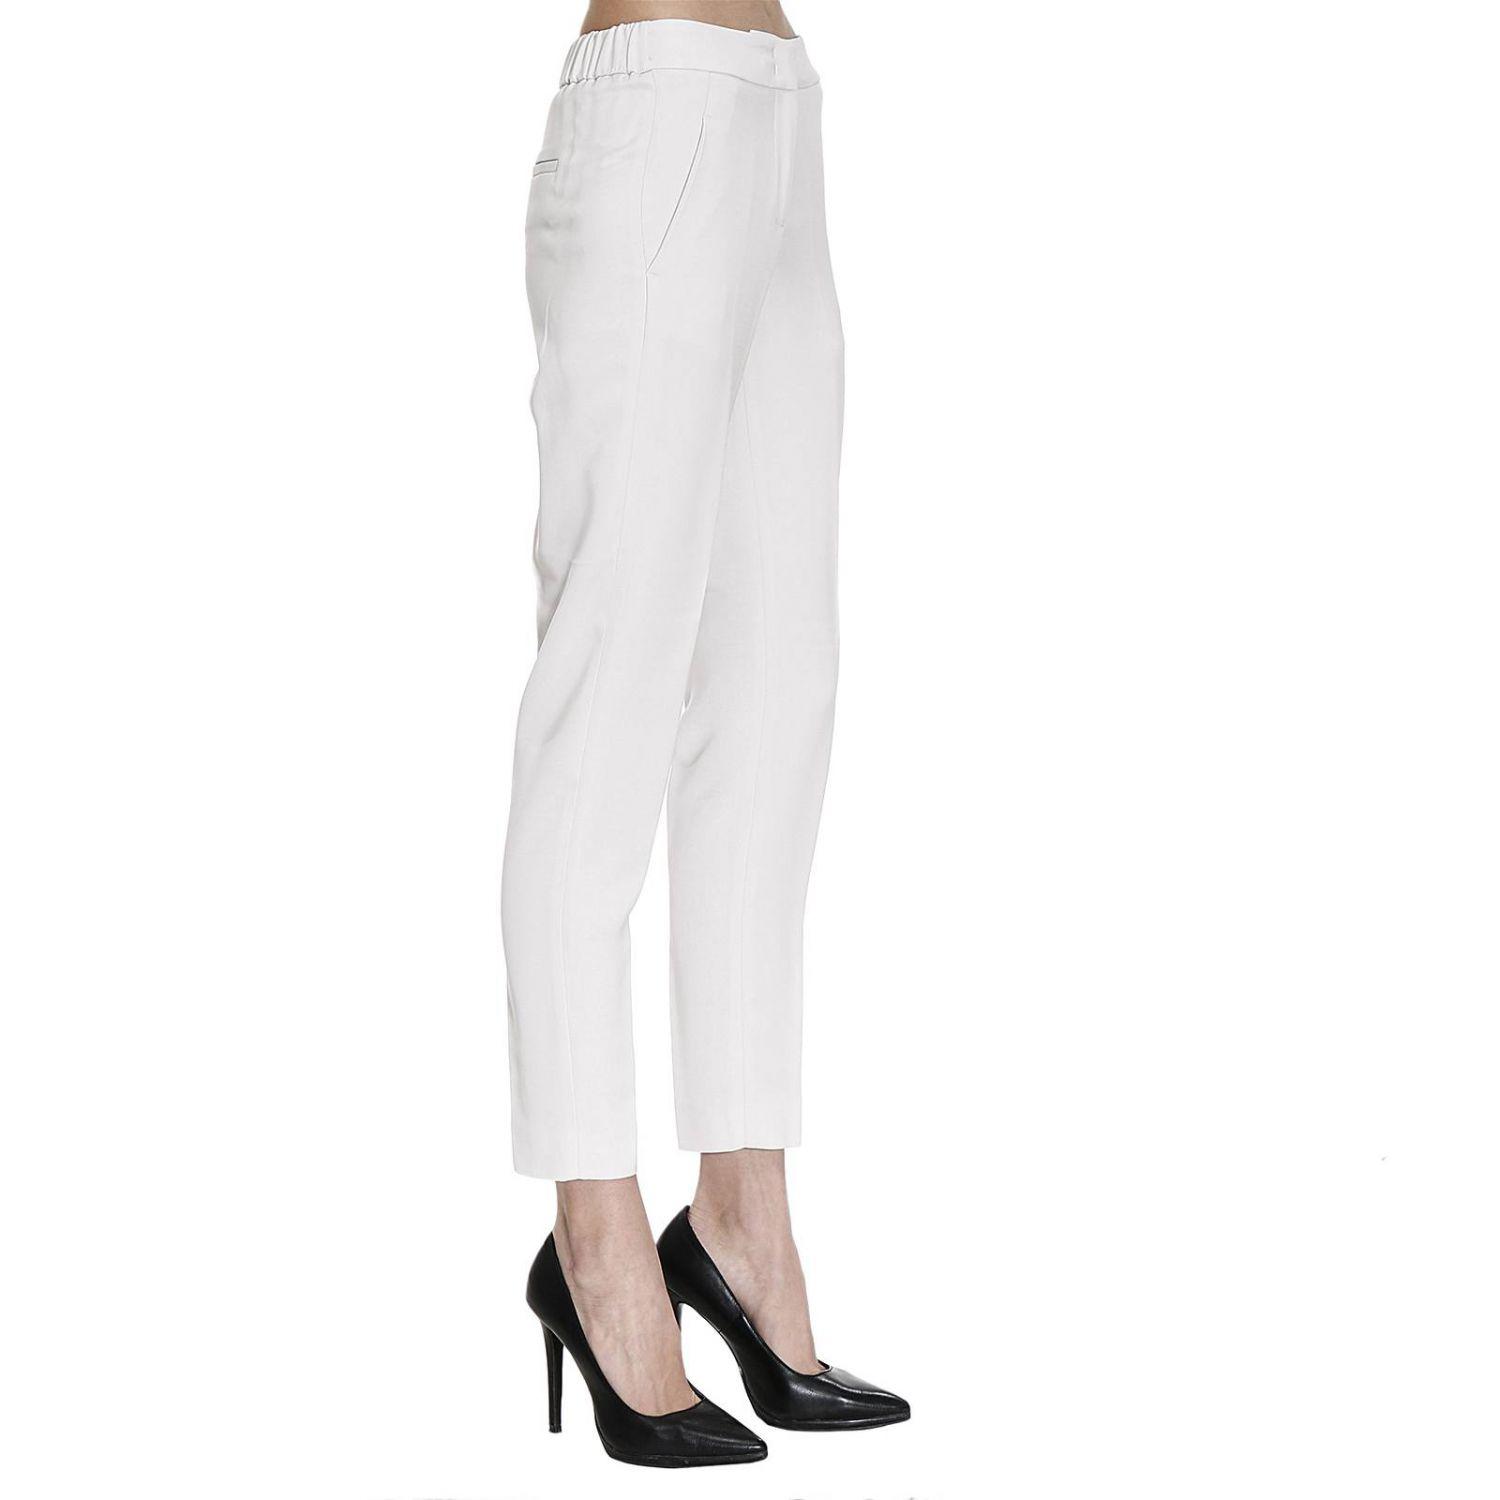 Lyst - Peserico Pants Women in White